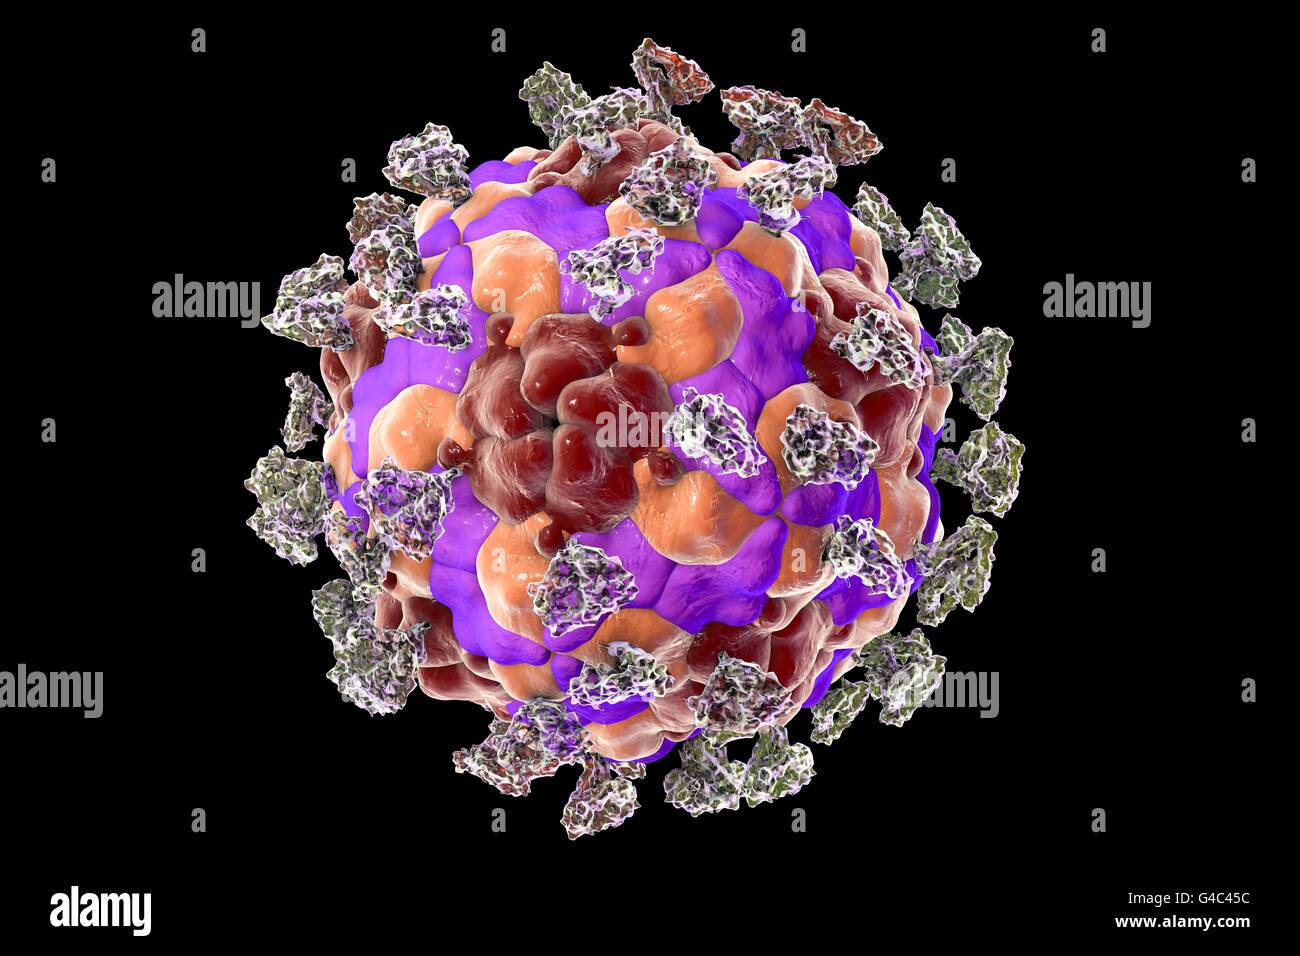 Enterovirus with attached integrin molecules, computer illustration. Enteroviruses are RNA (ribonucleic acid) viruses from the Picornaviridae family. Integrins serve as cell receptors for enteroviruses. Stock Photo